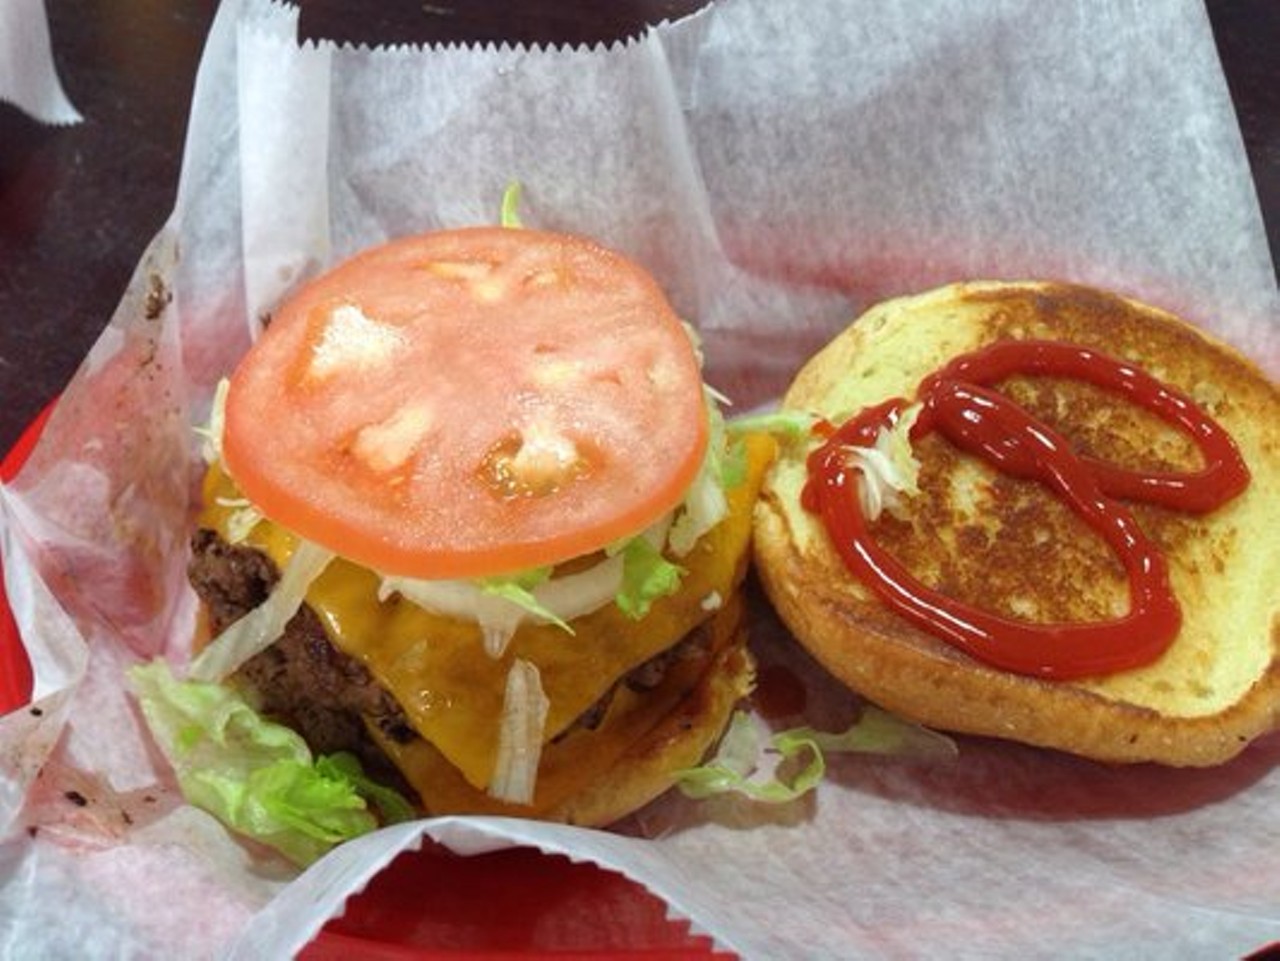 
Beth's Burger Bar
Single Cheeseburger
$4.48
24 E. Washington St.
407-650-4950
Photo via Yelp